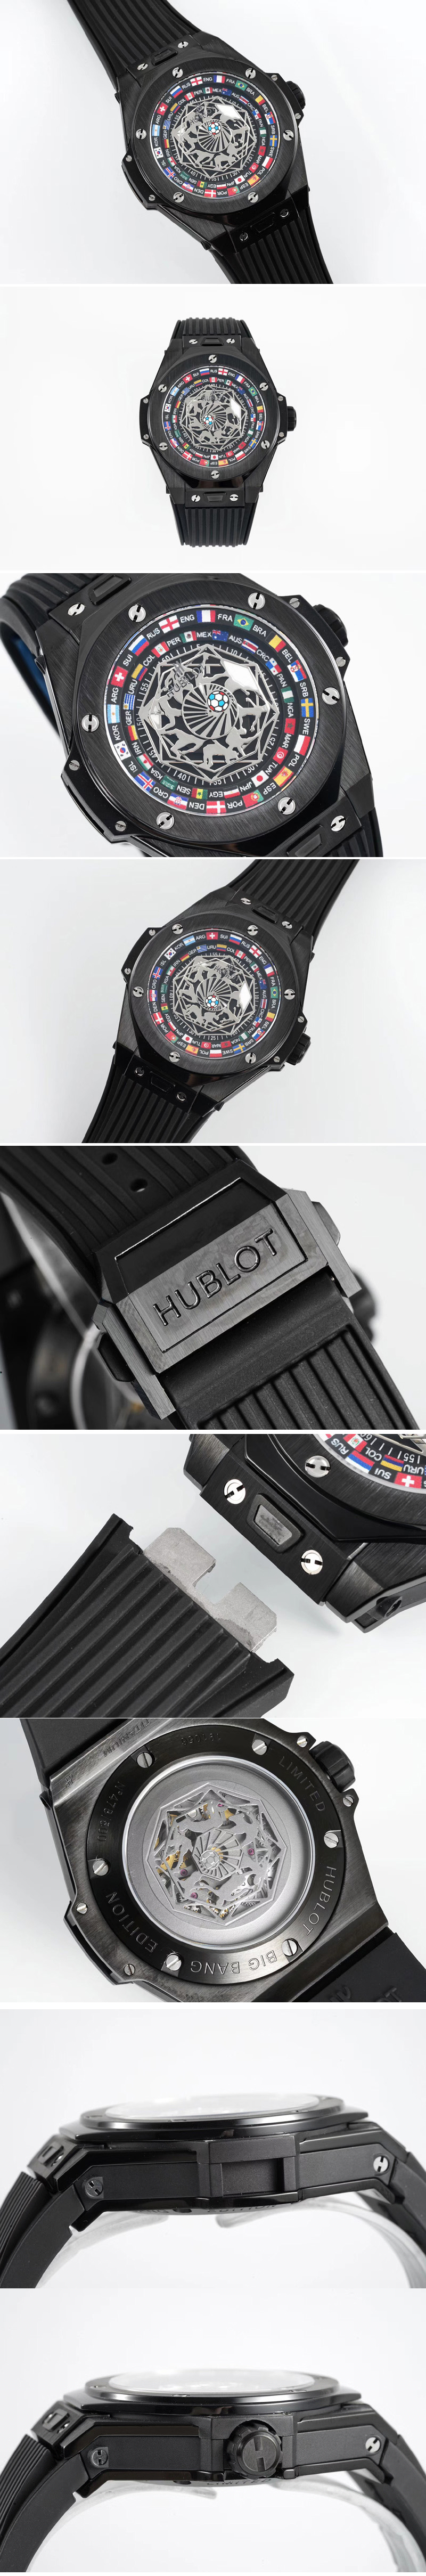 Replica Hublot Watches